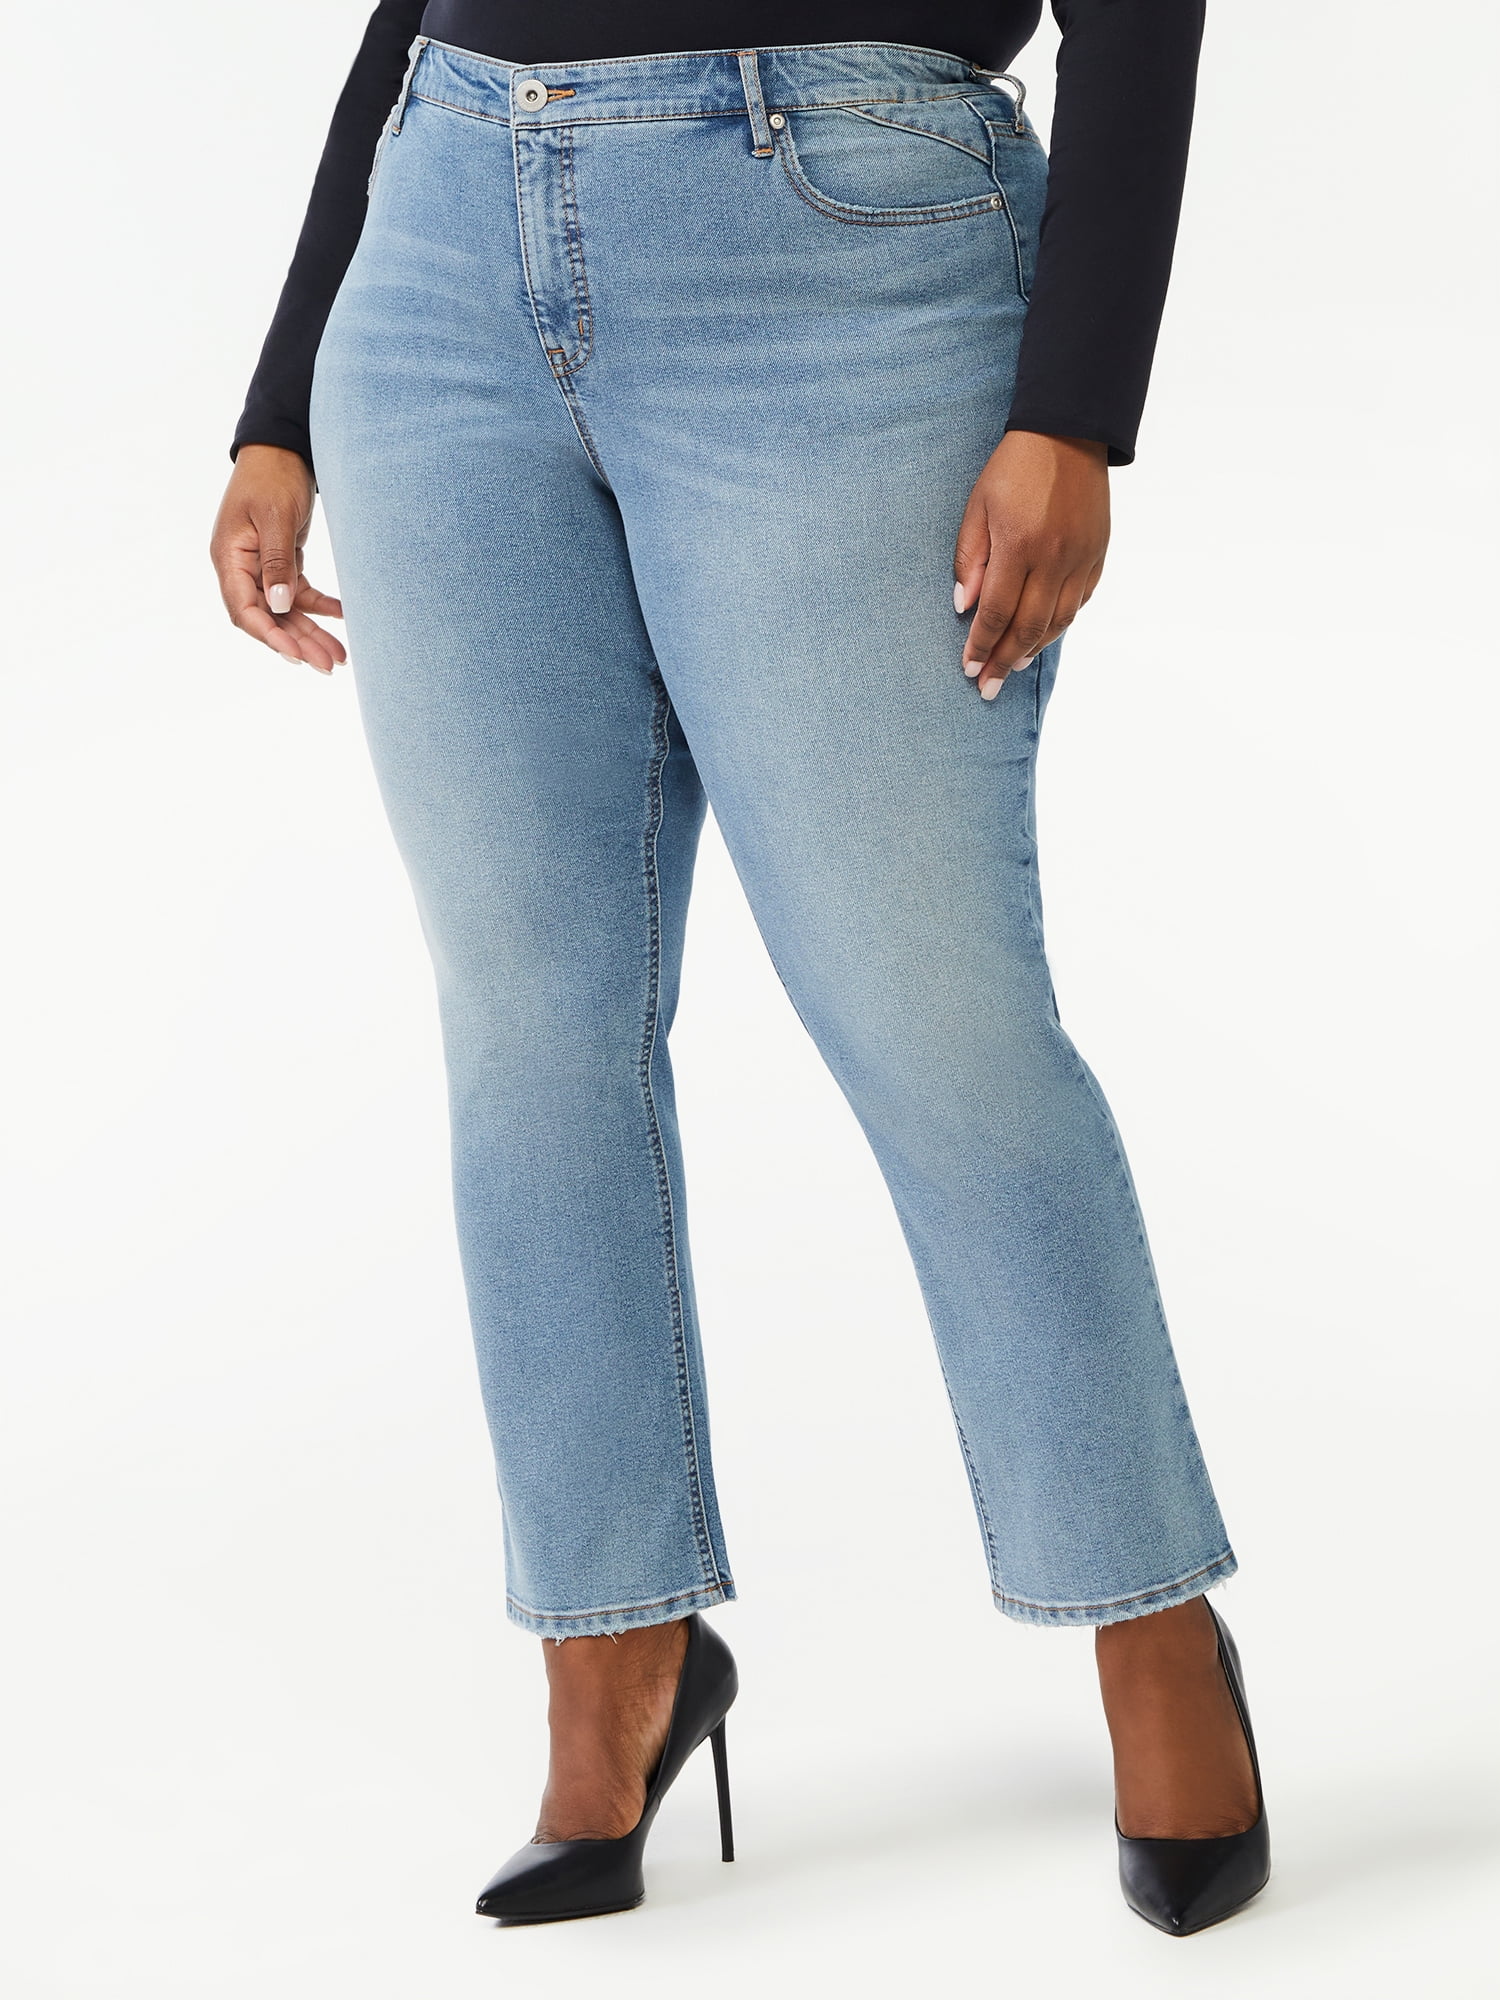 NWT Sofia Vergara Jeans Adora Super Hi-Rise Curvy Girlfriend size 20 Short